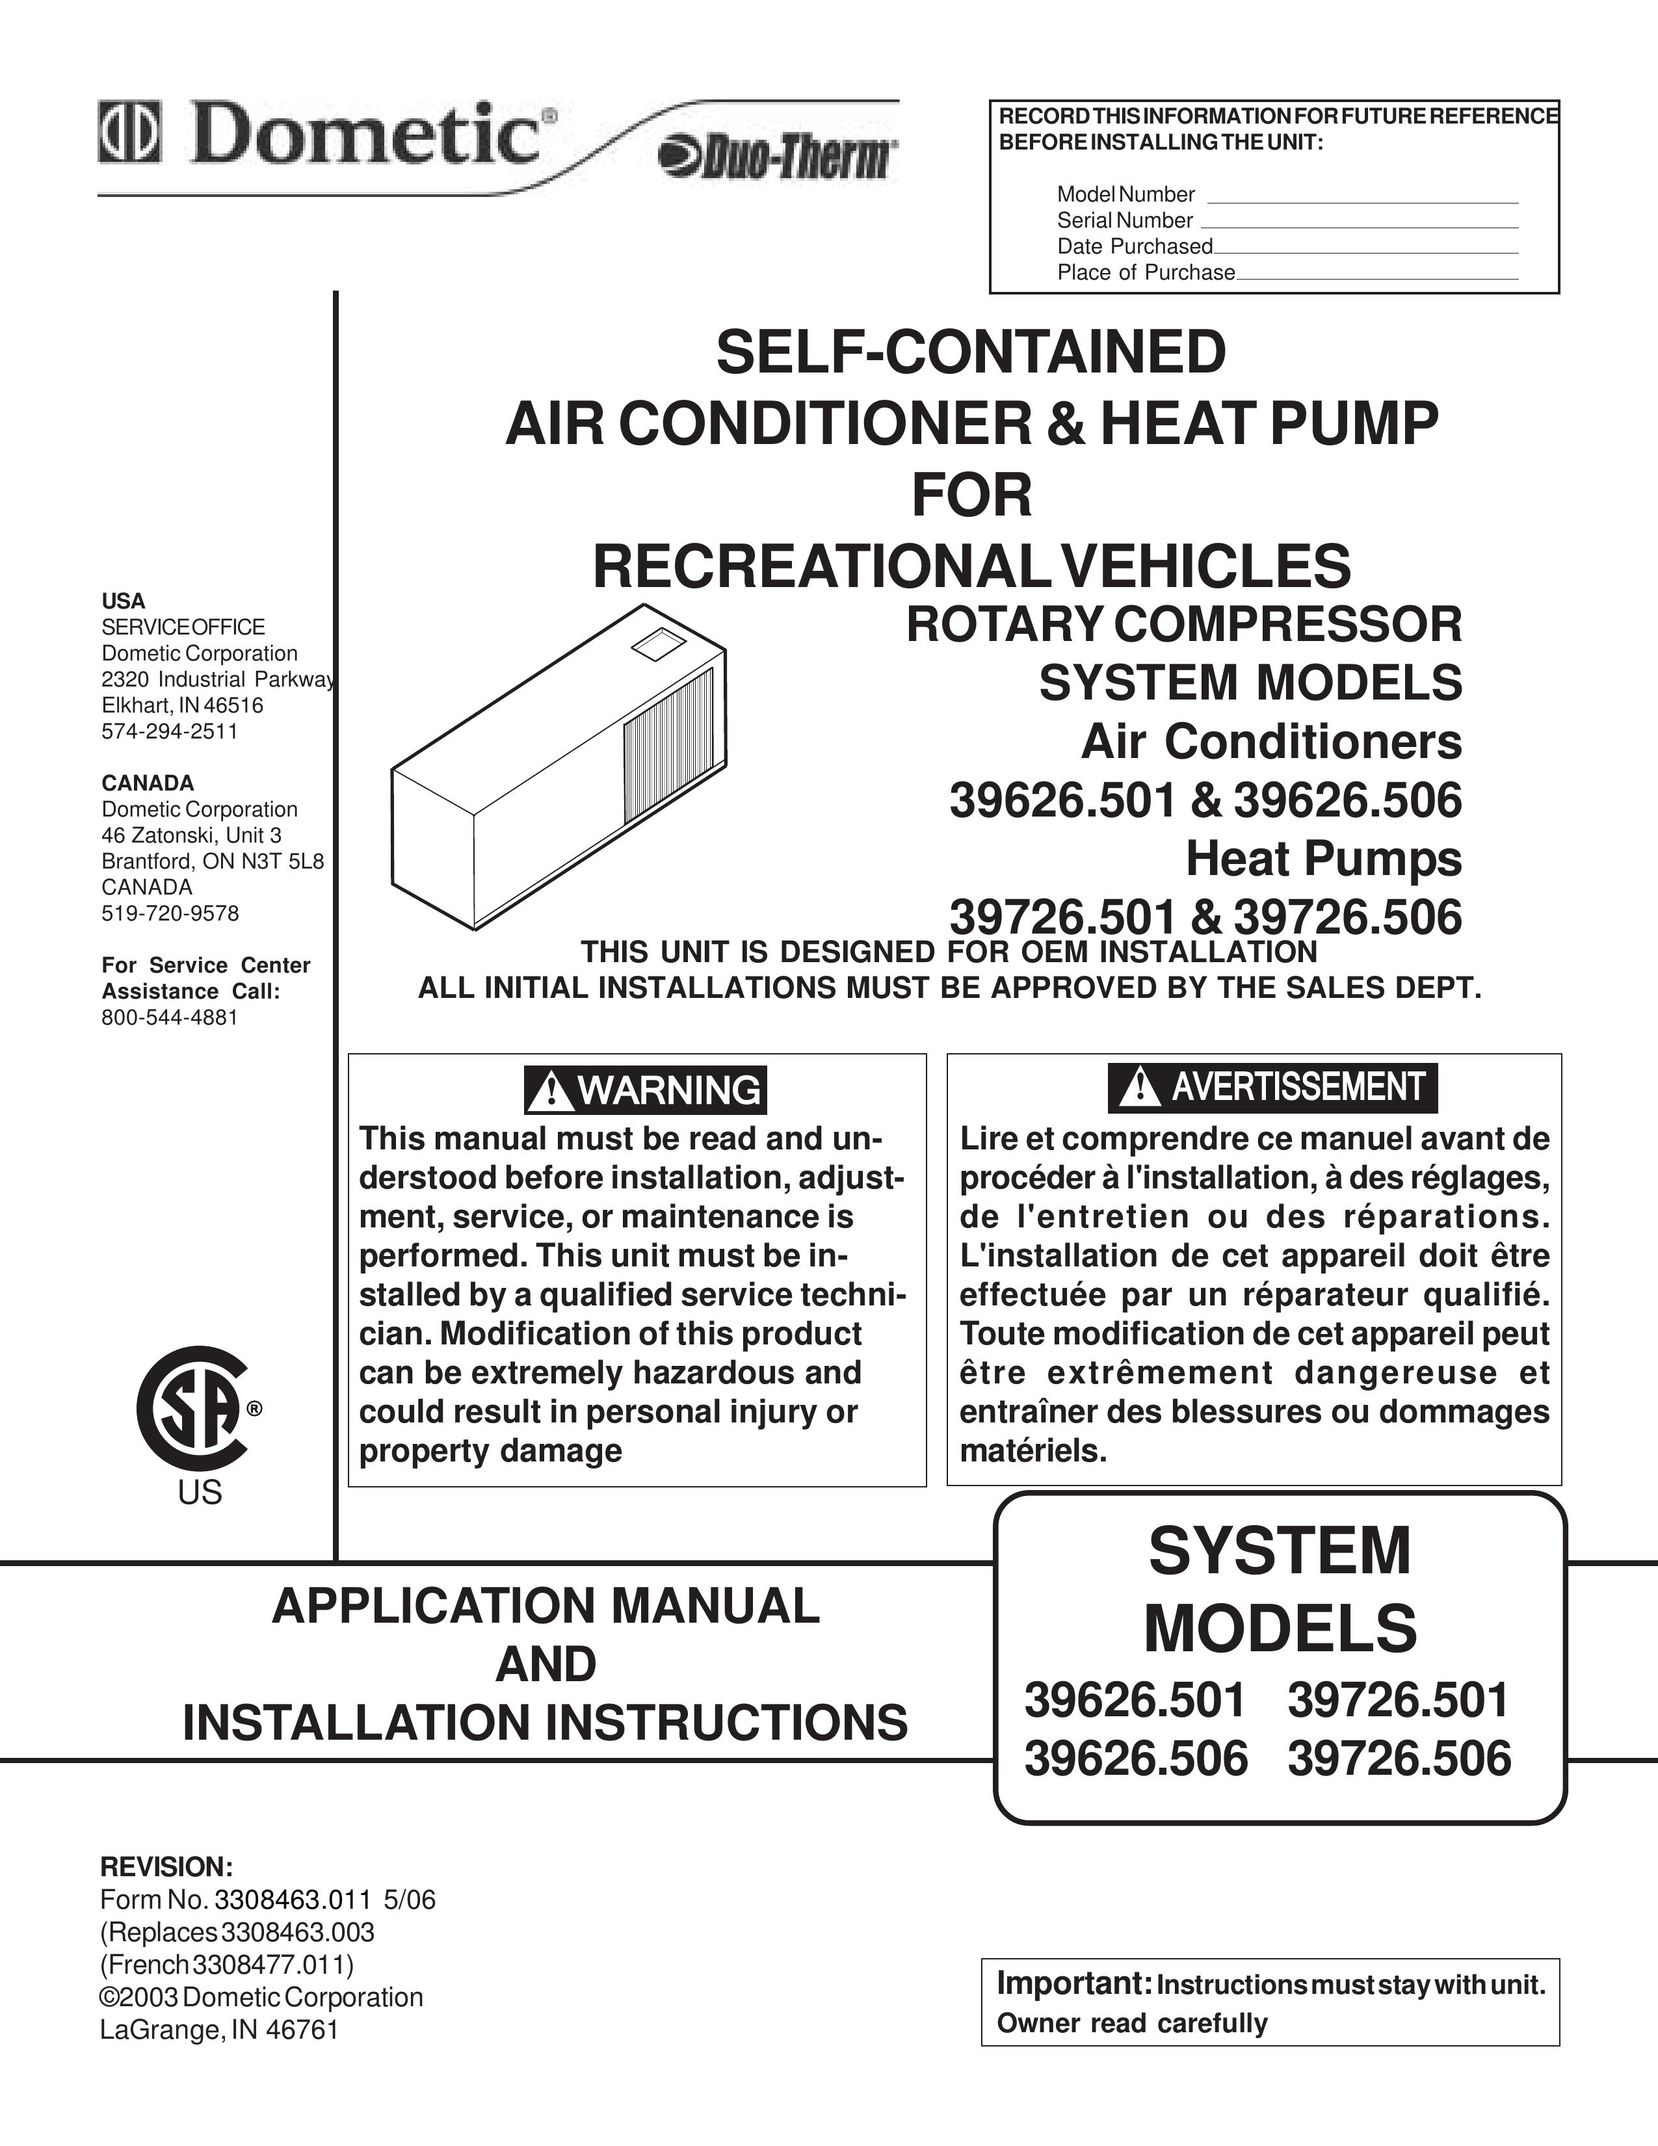 Dometic 39626.501 Air Conditioner User Manual